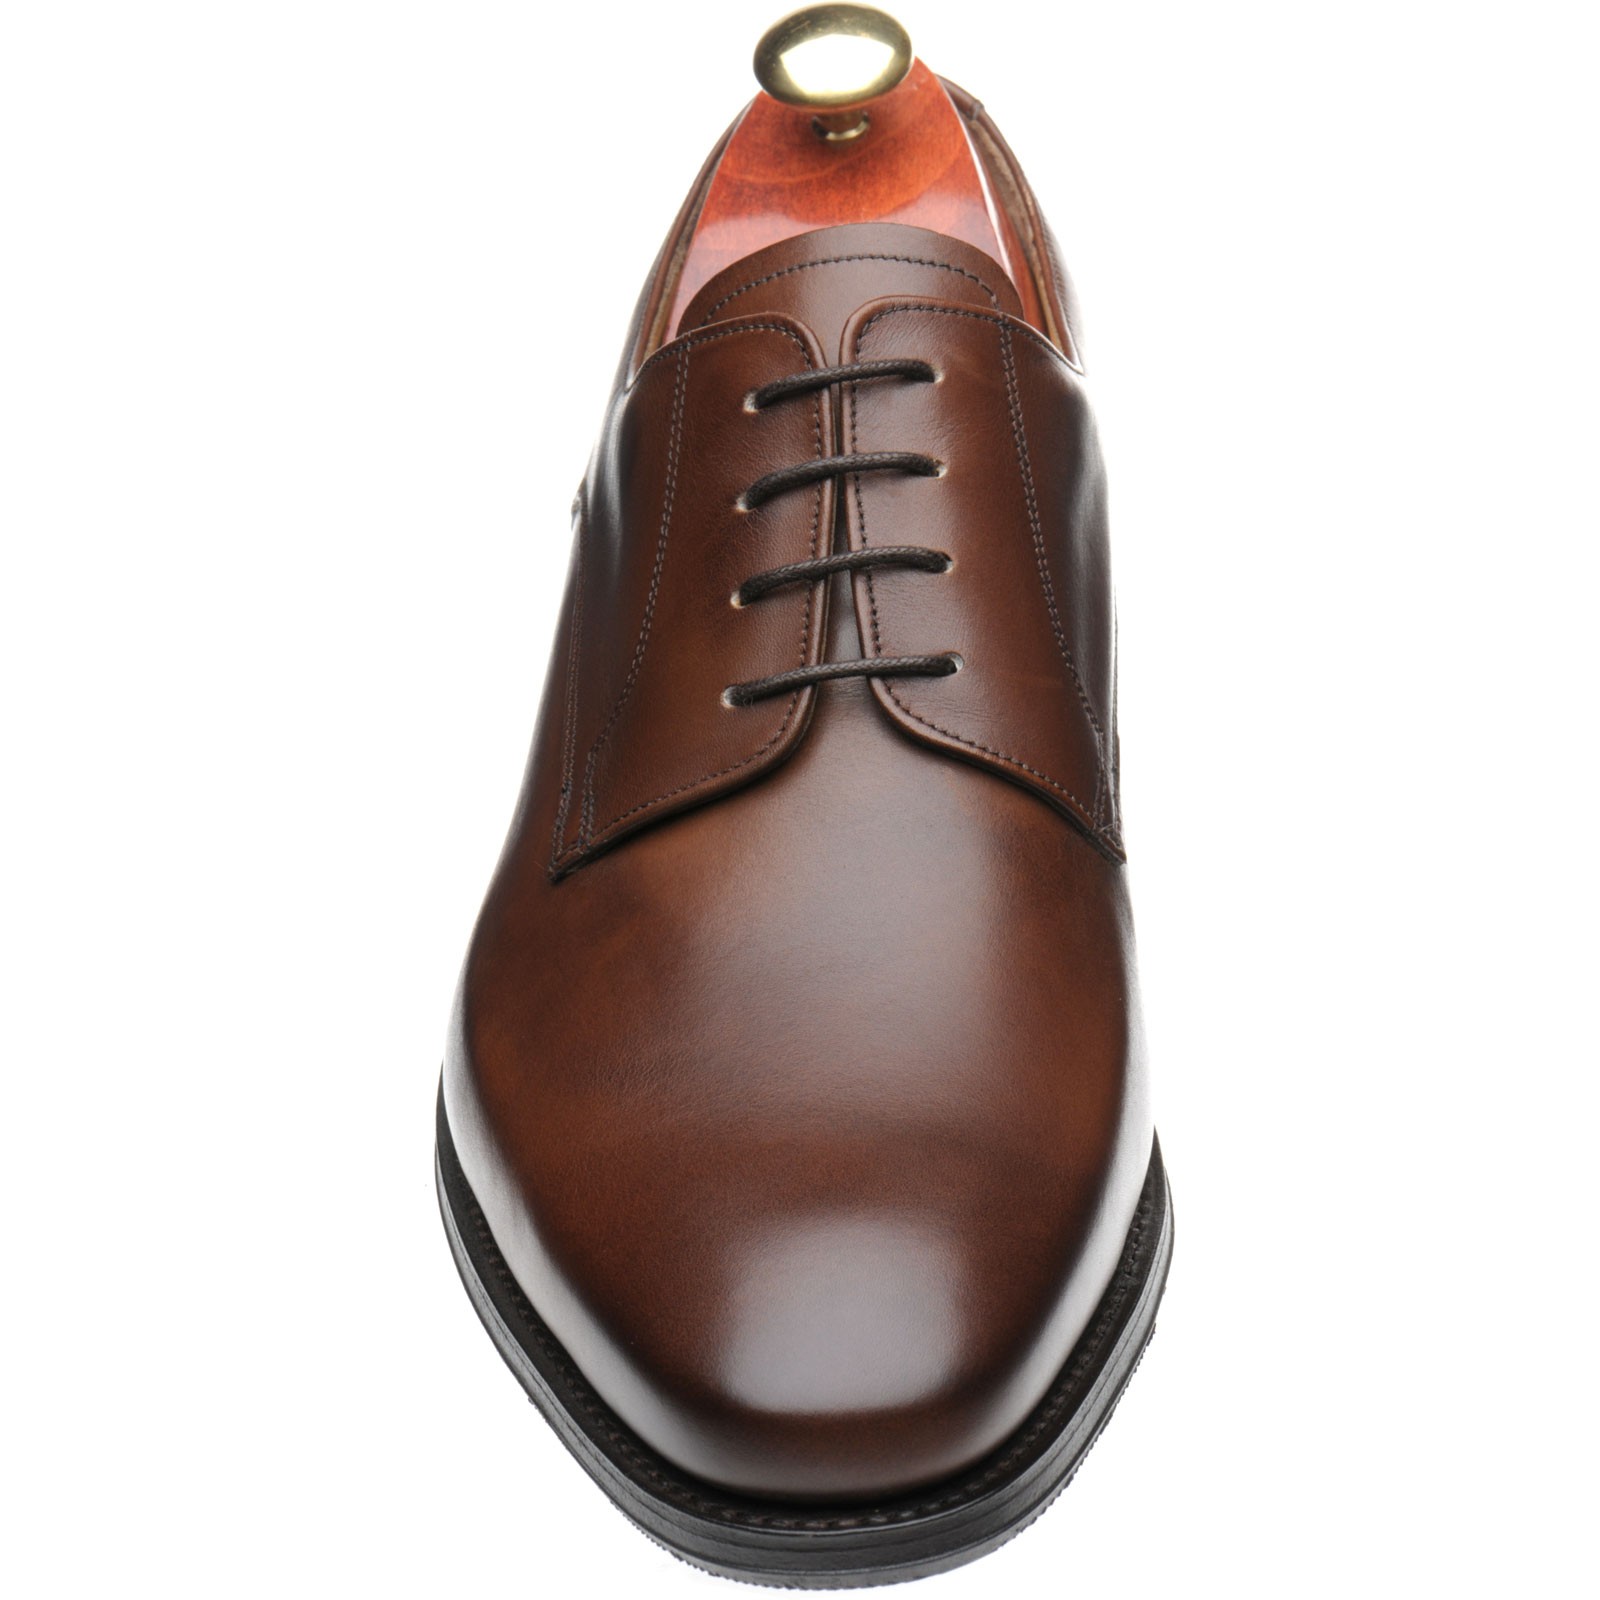 Barker shoes | Barker Tech | Ellon in Dark Walnut Calf at Herring Shoes